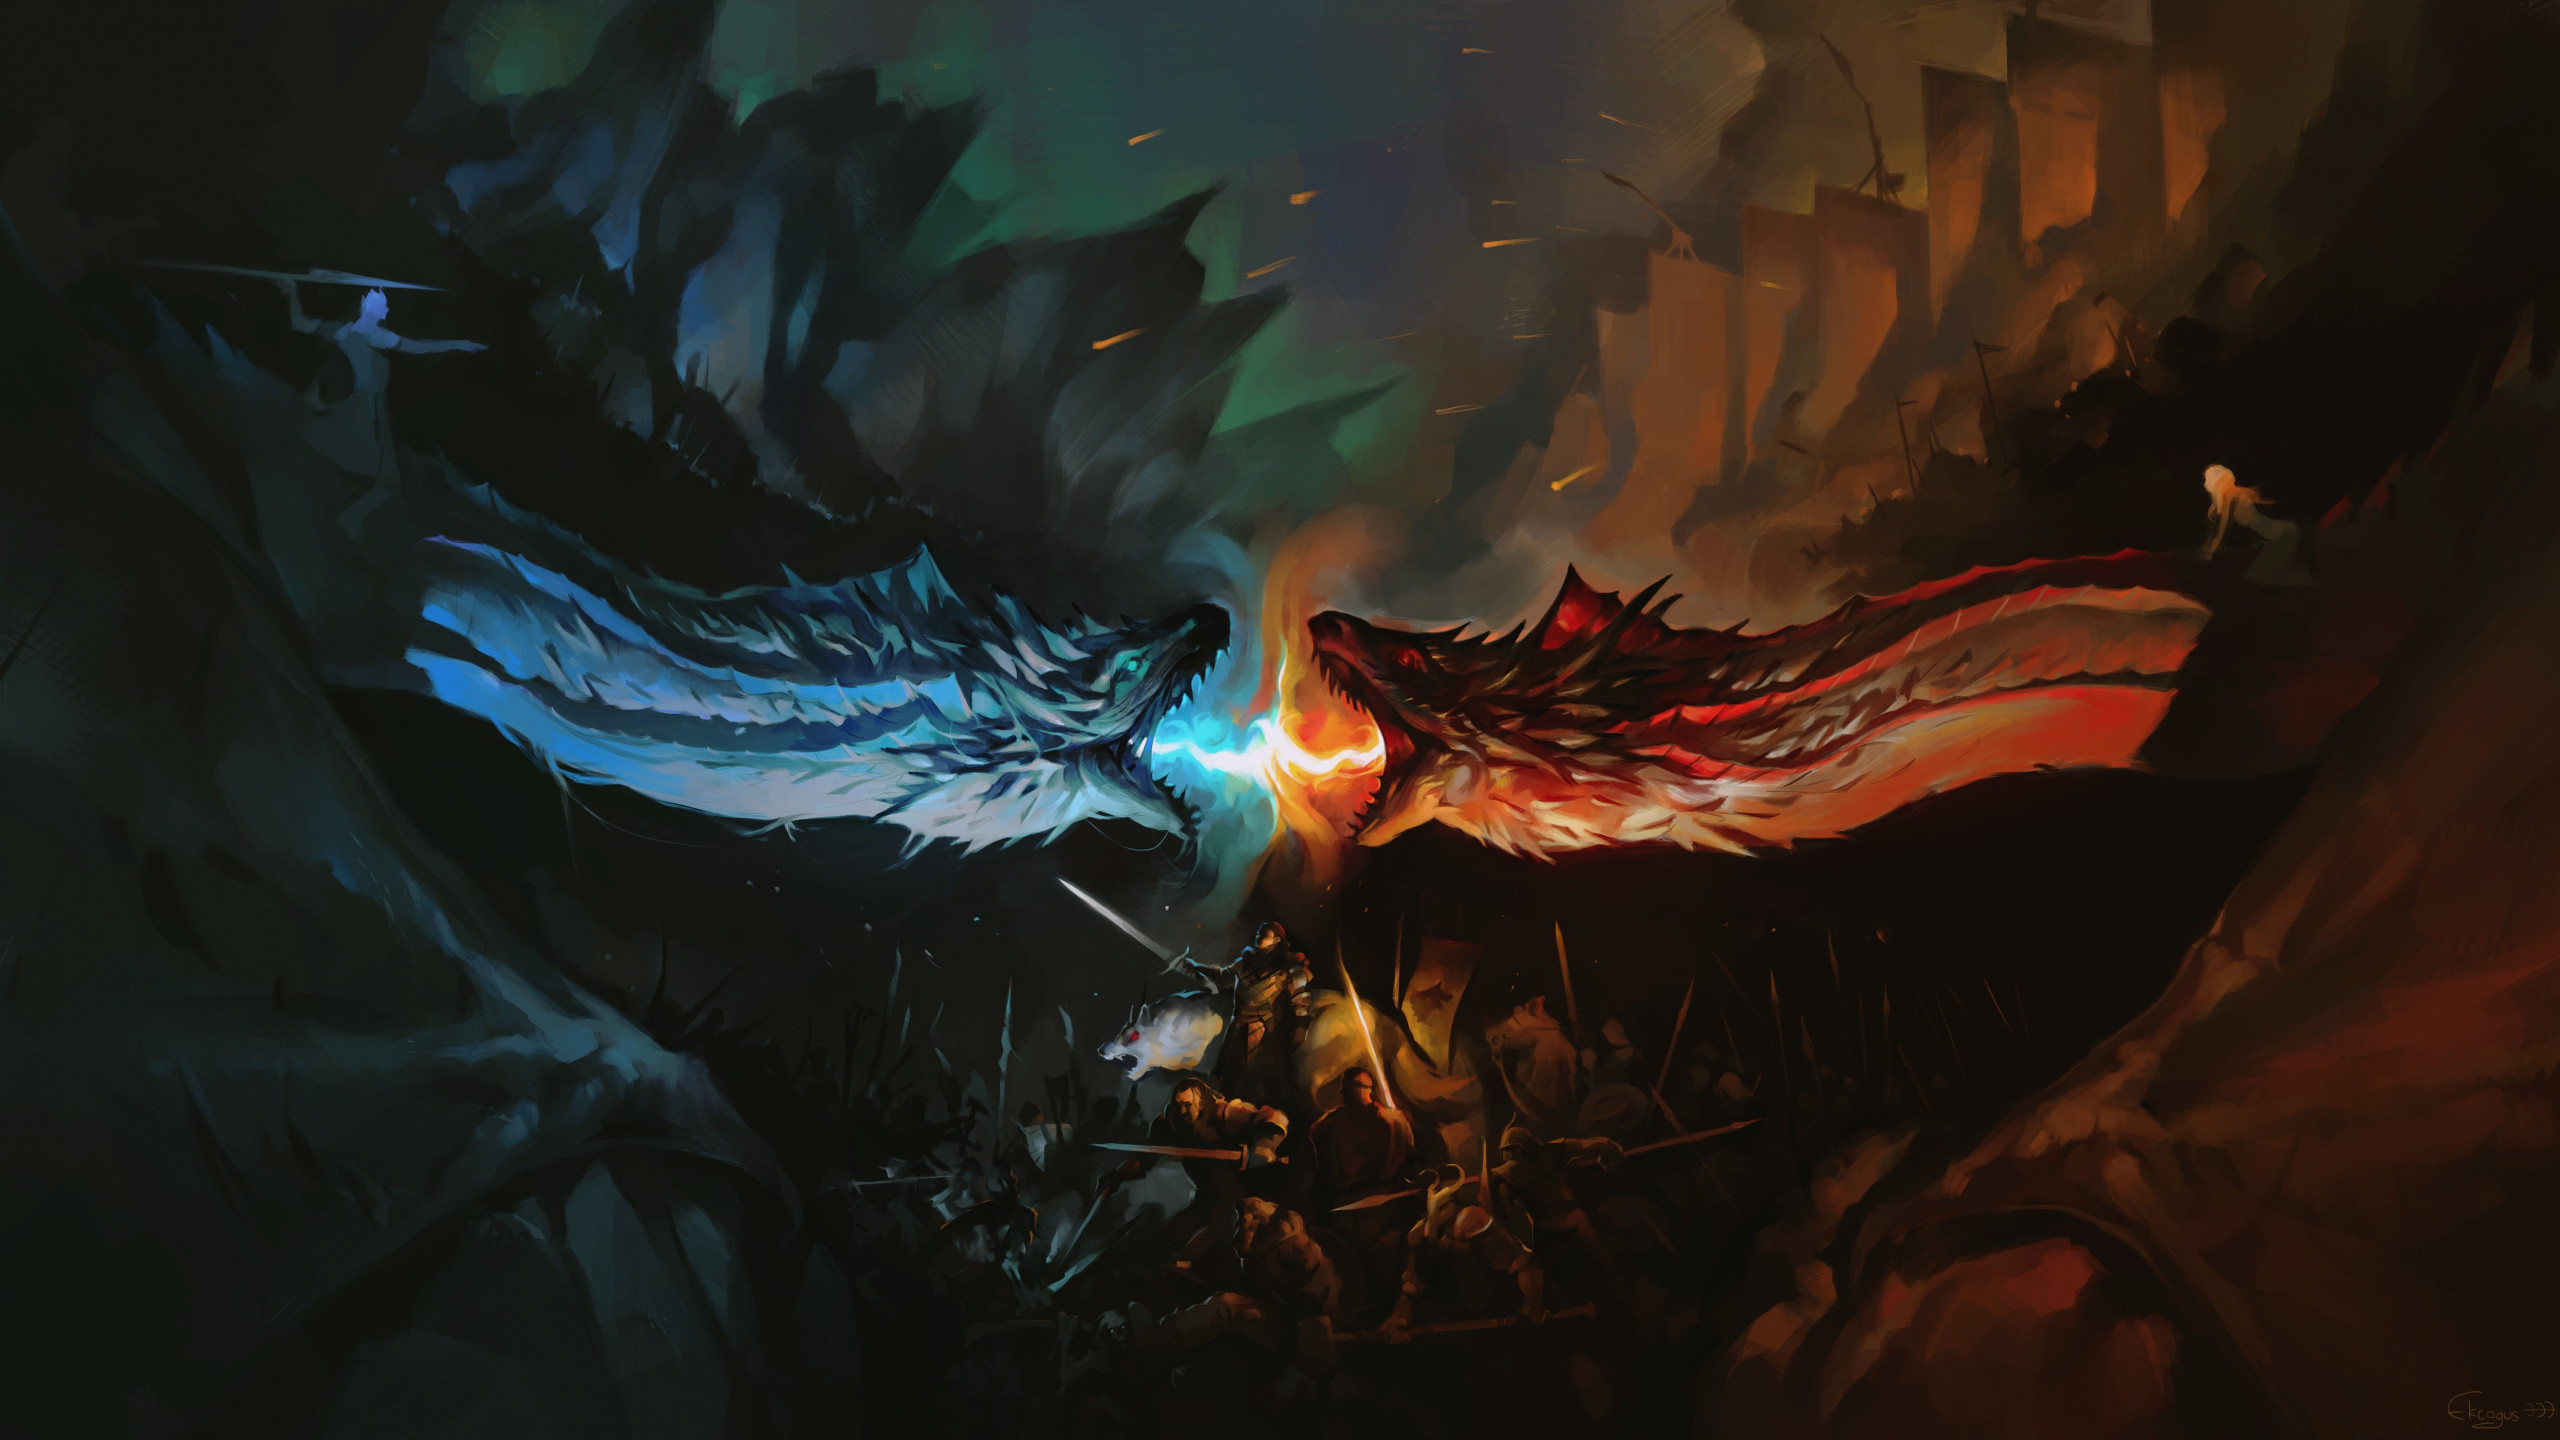 Game Of Thrones, Tv Series, Dragons - Game Of Thrones Wallpaper Dragon - HD Wallpaper 